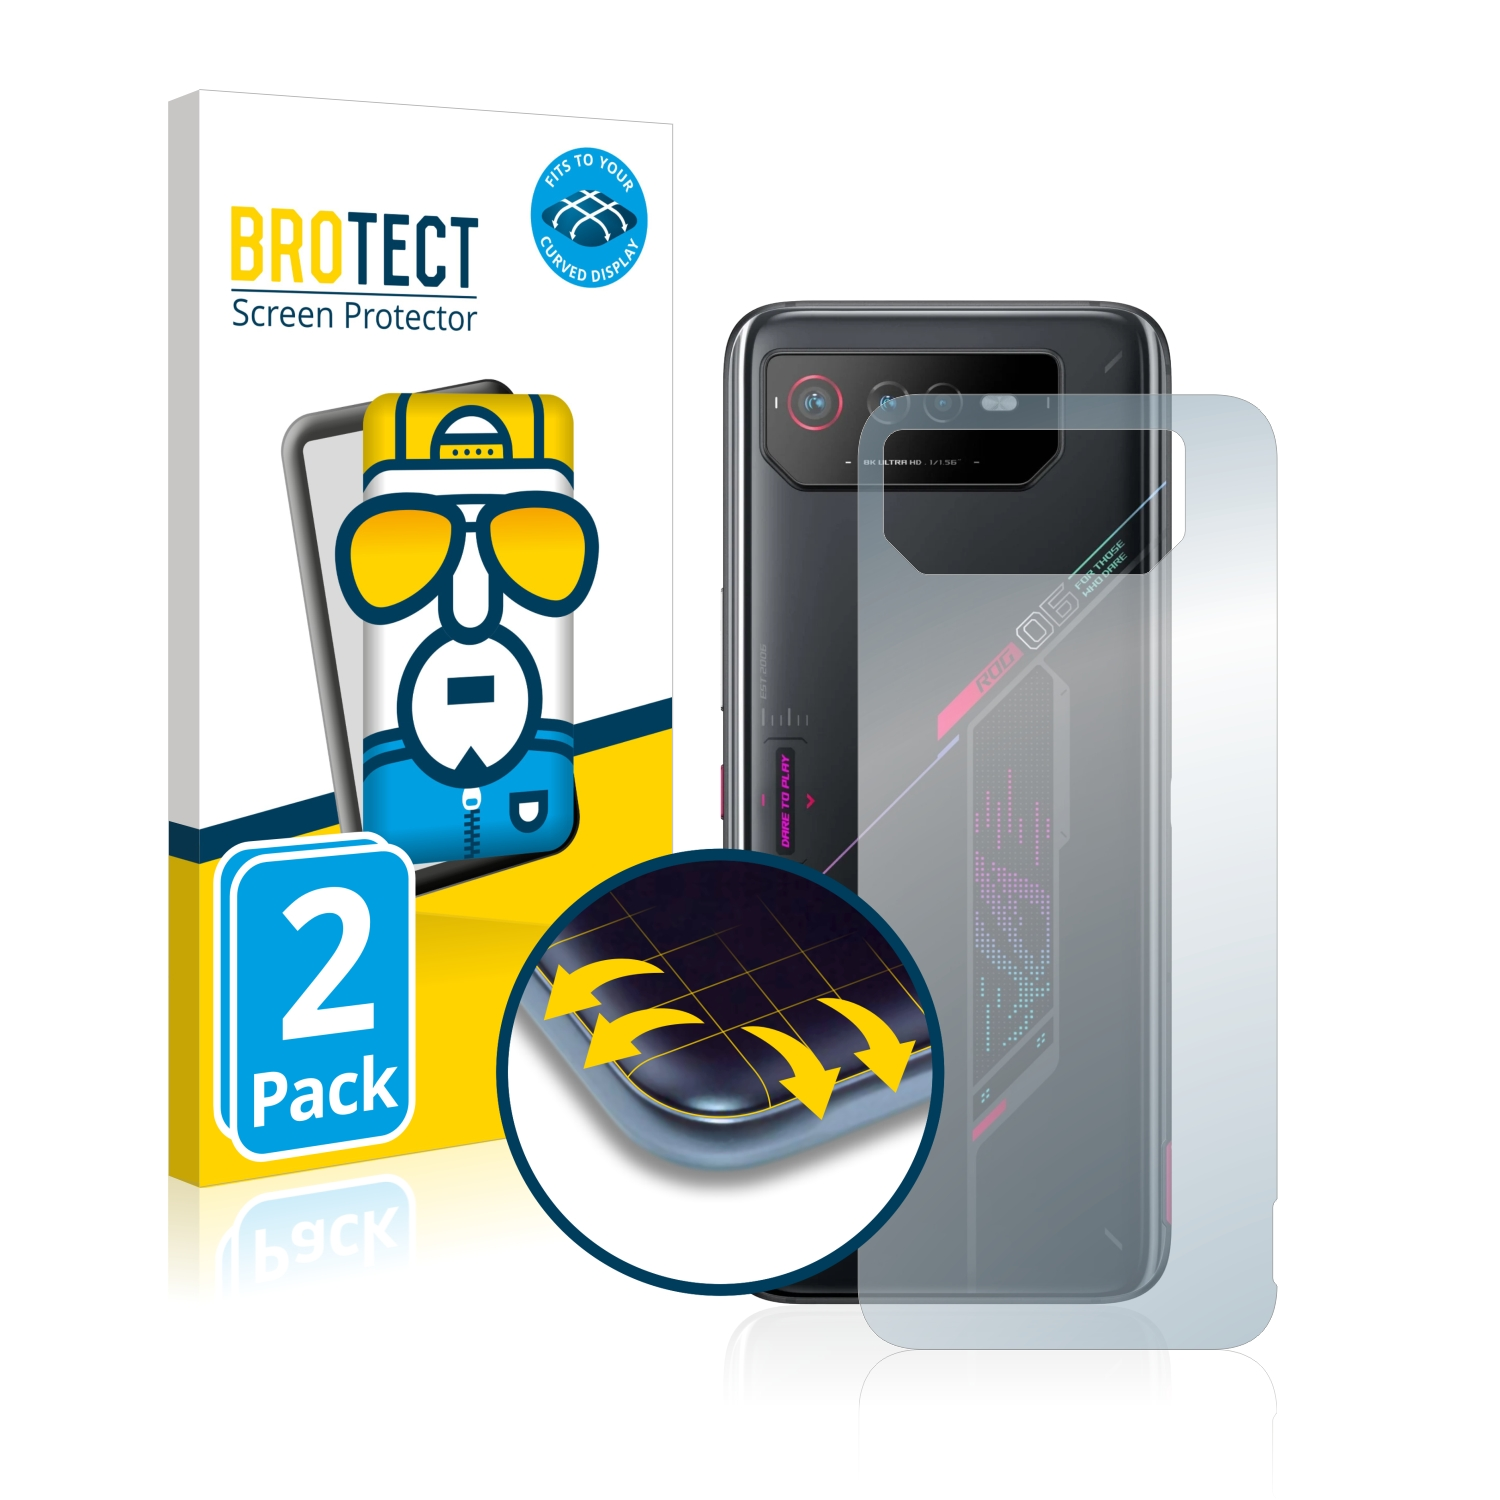 2x 3D Flex 6) Schutzfolie(für ROG Phone Curved ASUS BROTECT Full-Cover